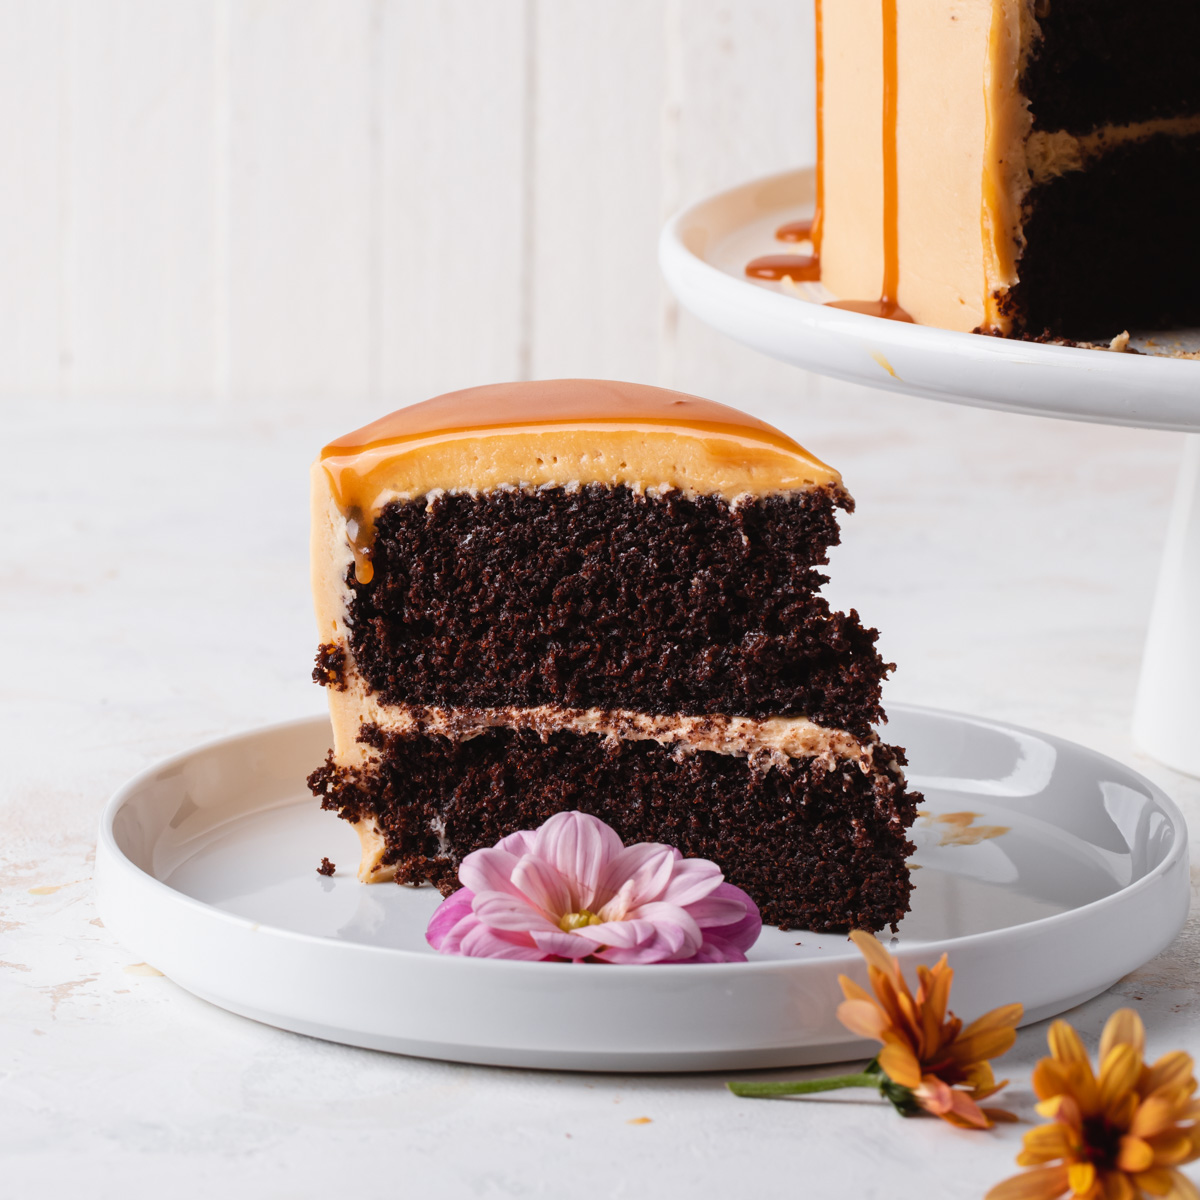 Chocolate Caramel Decadence Cake